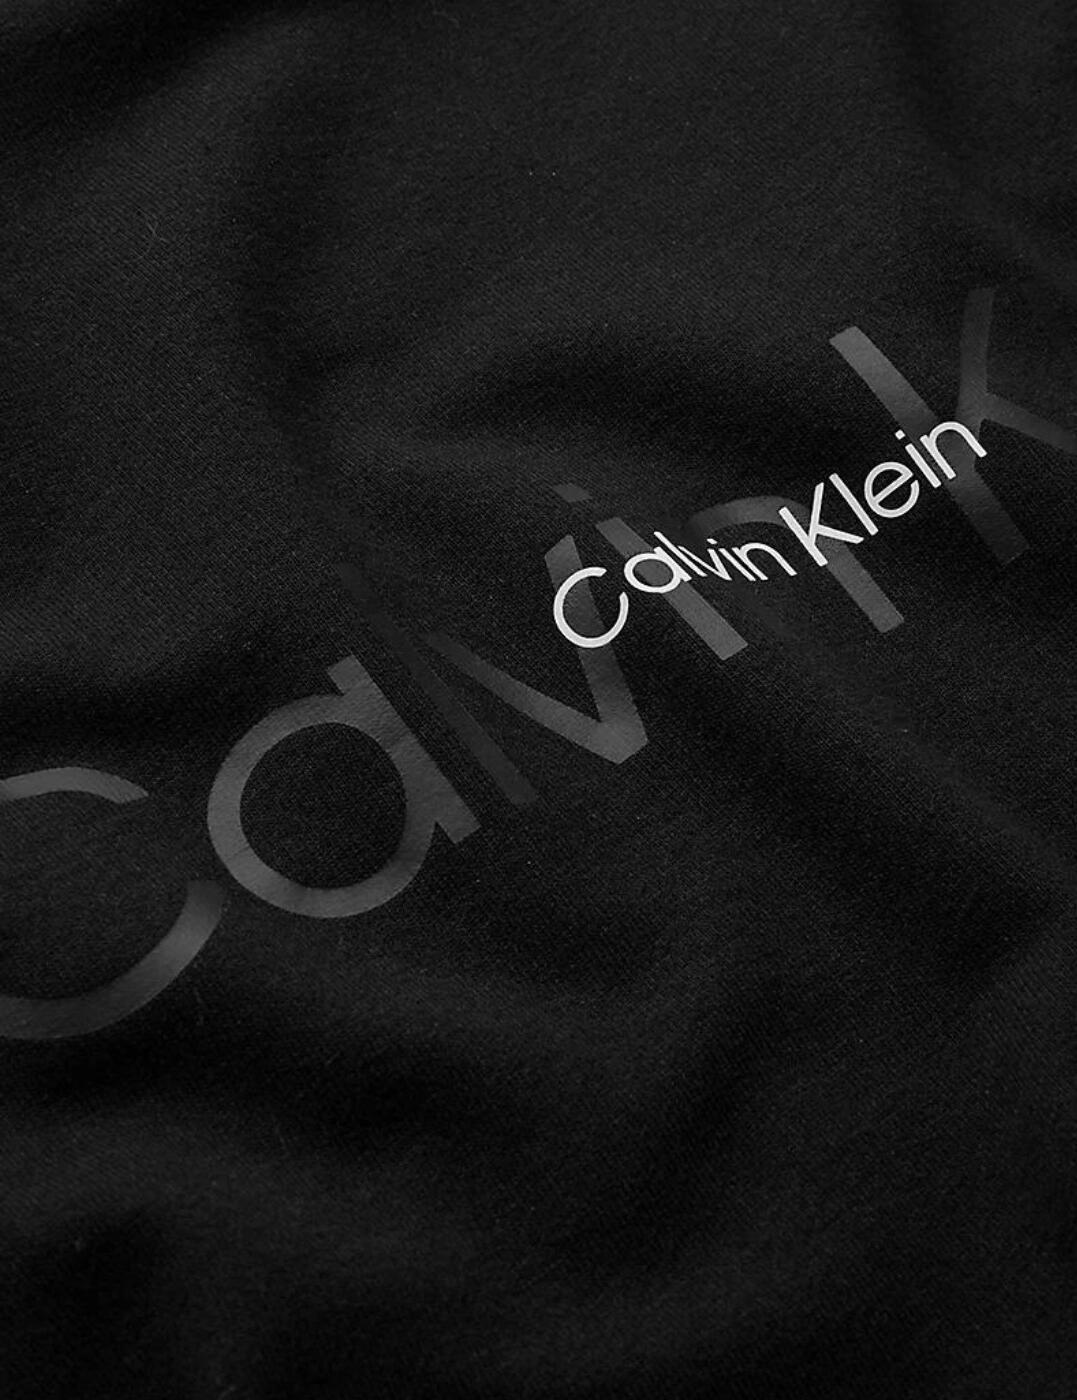 Calvin Klein Women's Embossed Icon Lounge Sweatshirt